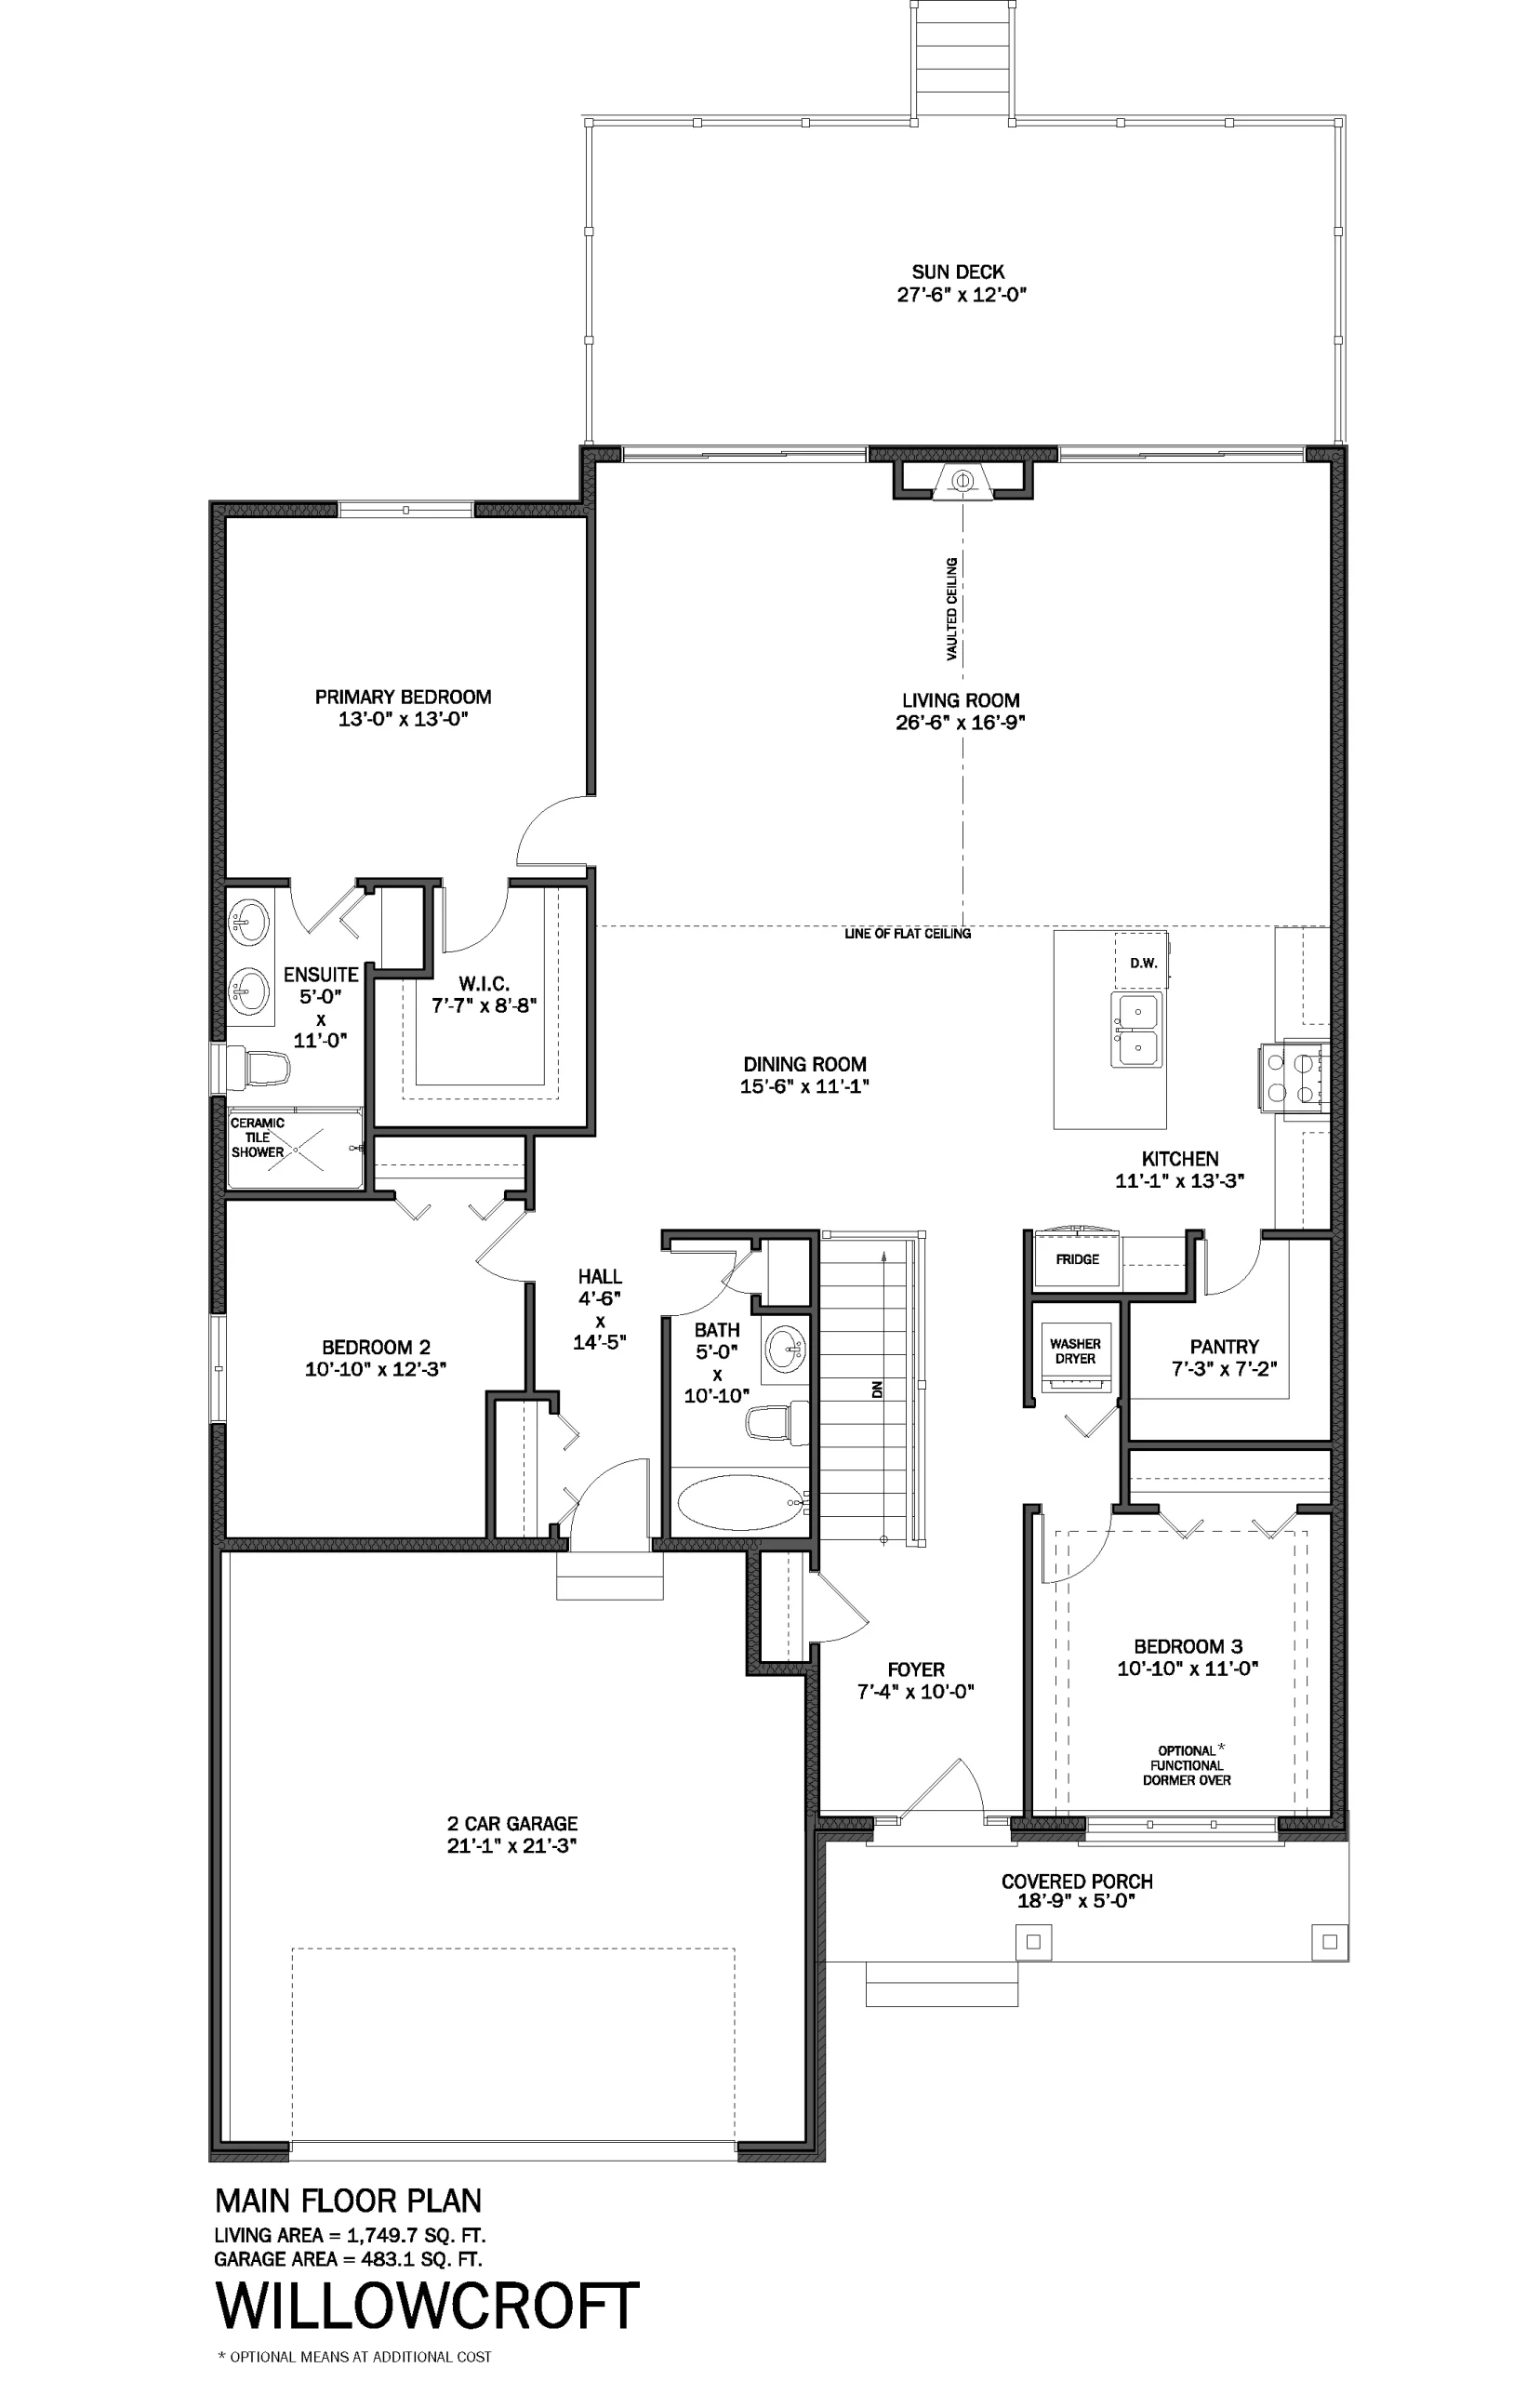 Willowcroft Main Floor Plan